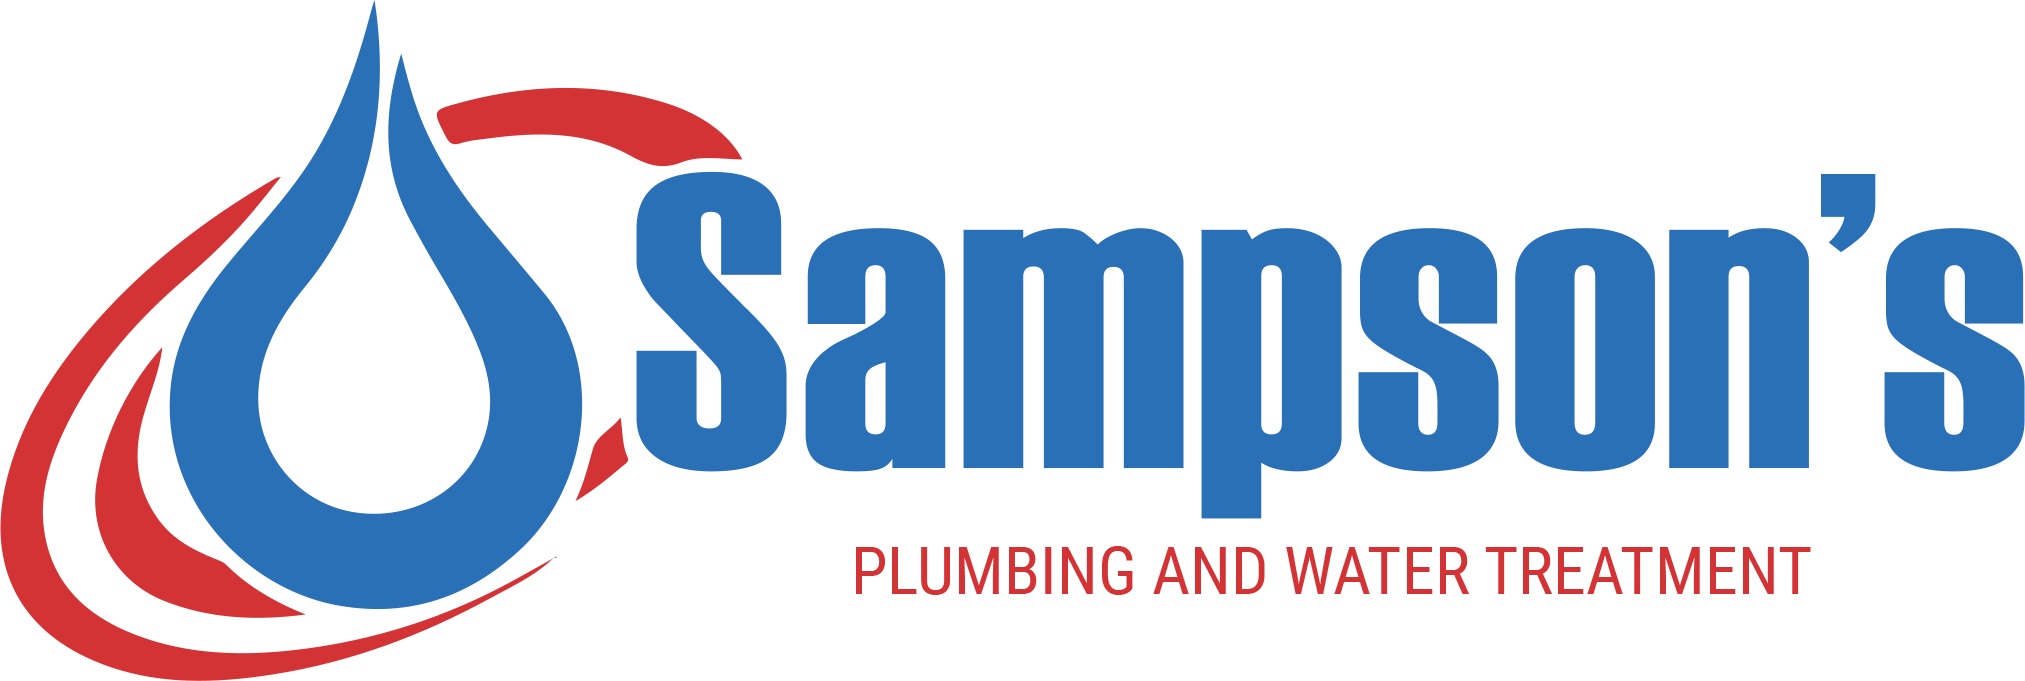 Sampson's Plumbing & Water Treatment, LLC Logo